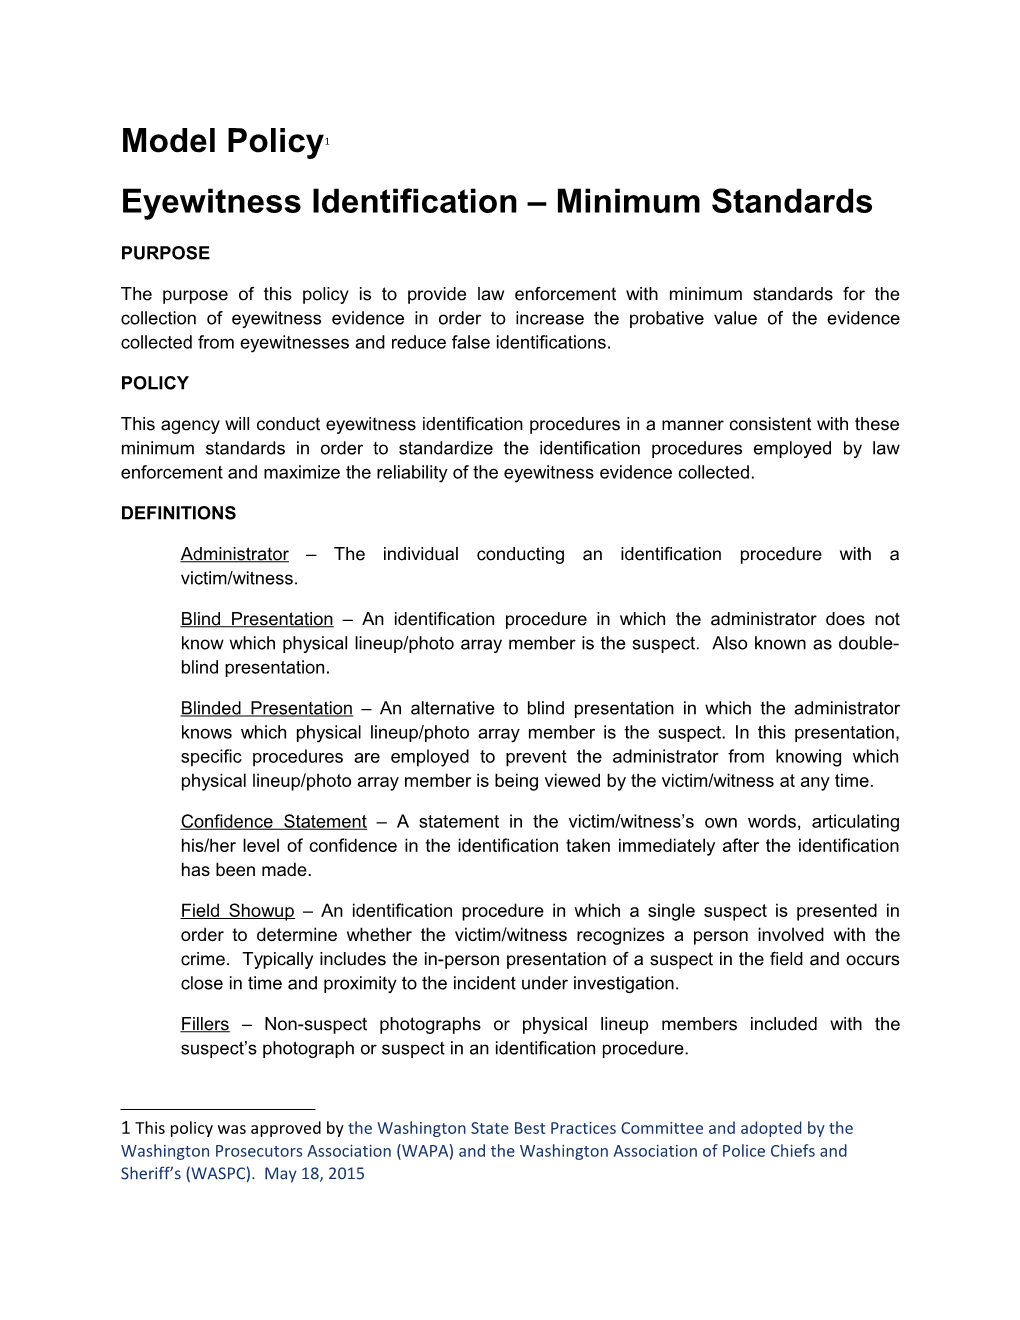 Eyewitness Identification Minimum Standards